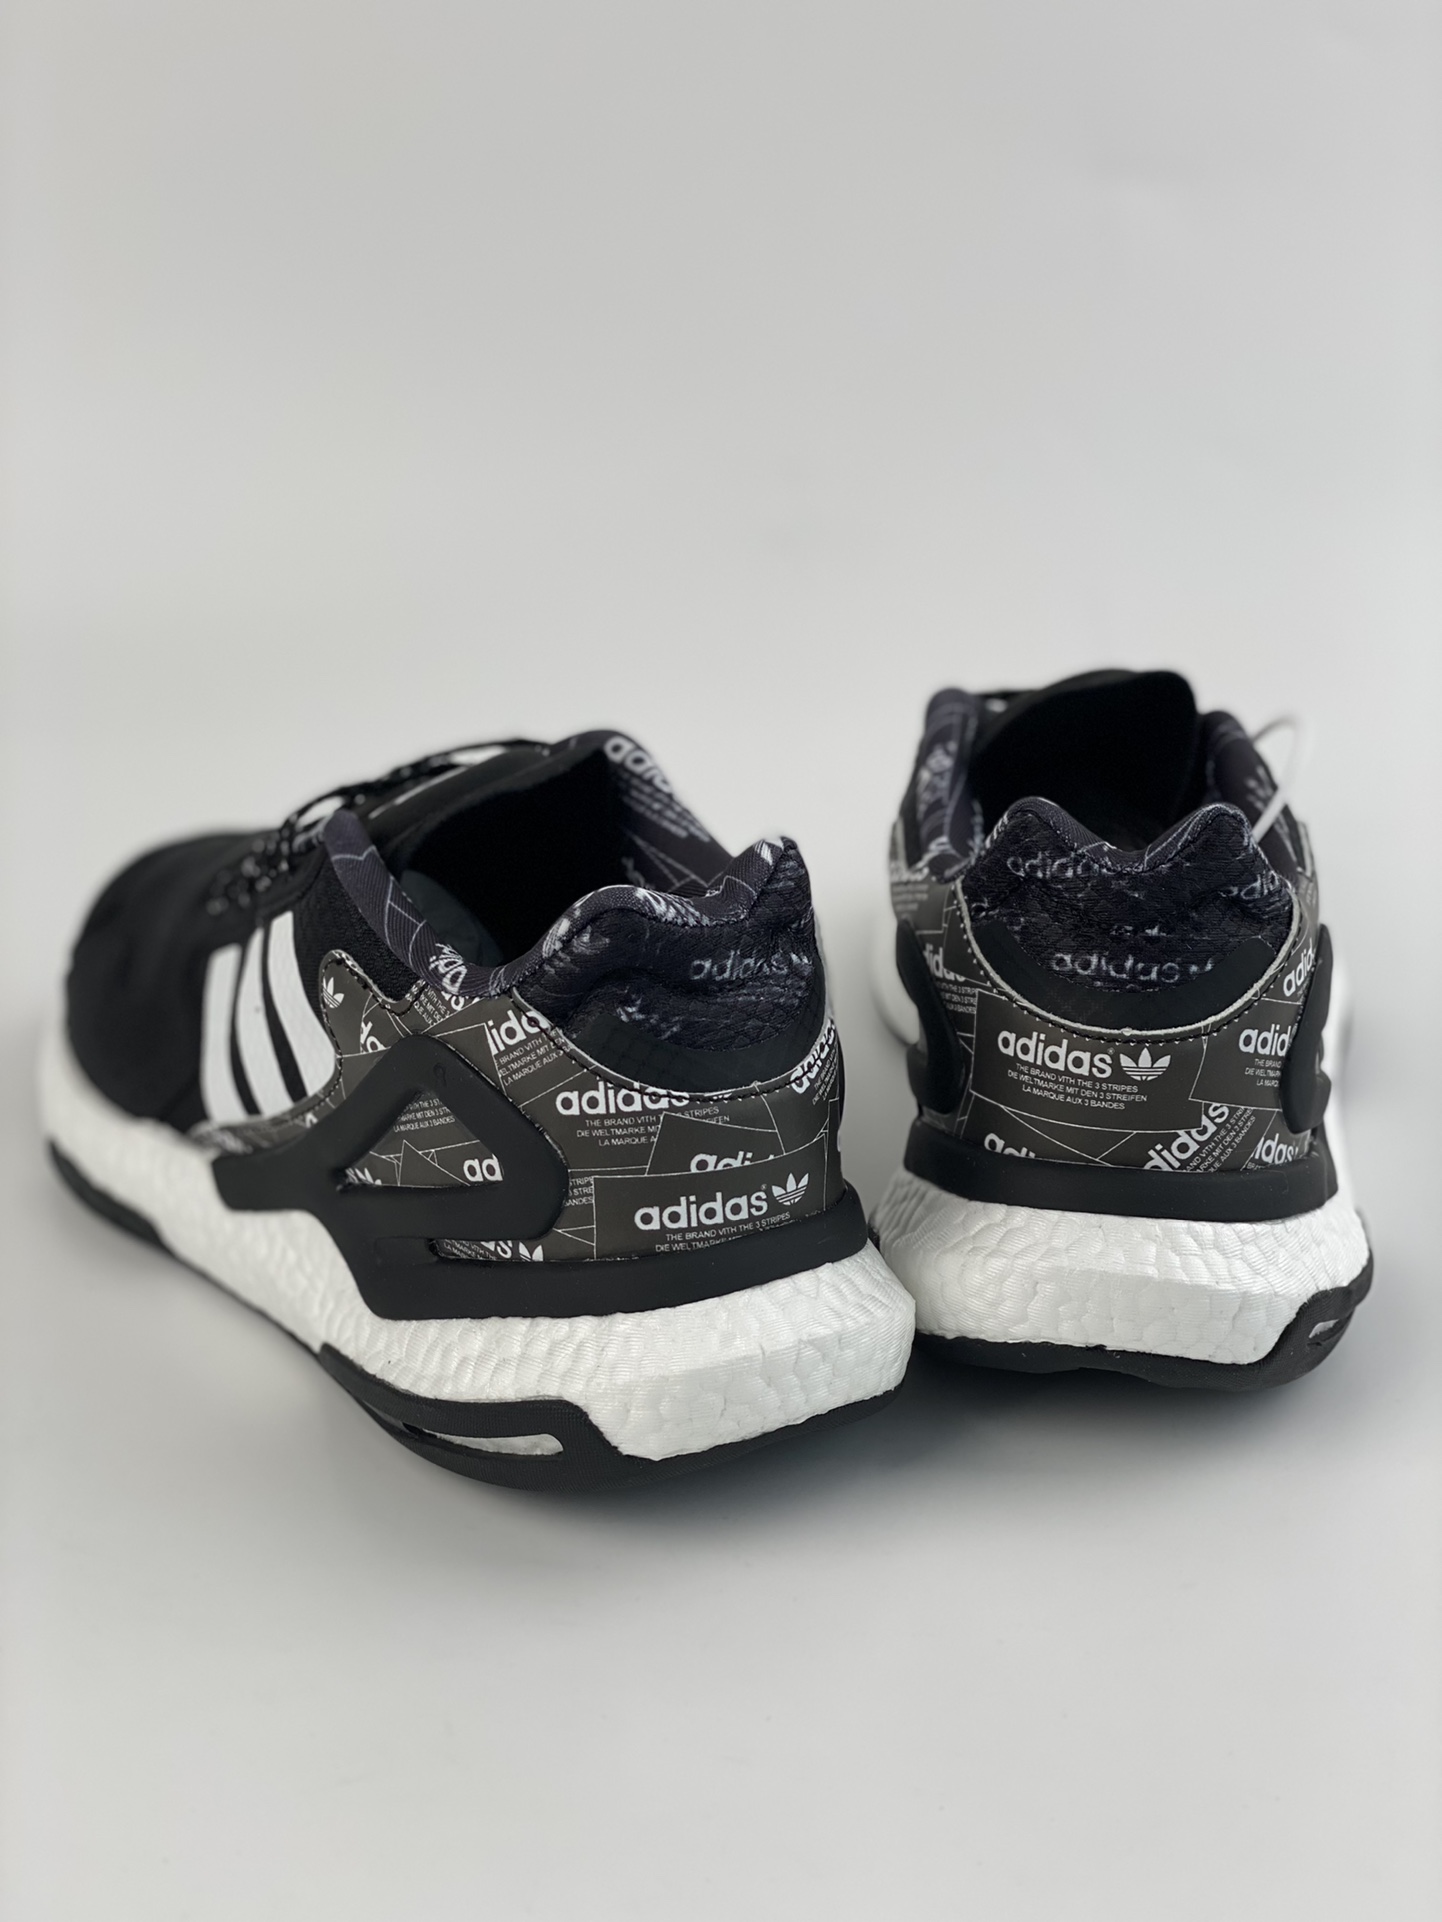 Adidas Day Jogger Night Walker 2nd Generation Get Edition FY6167